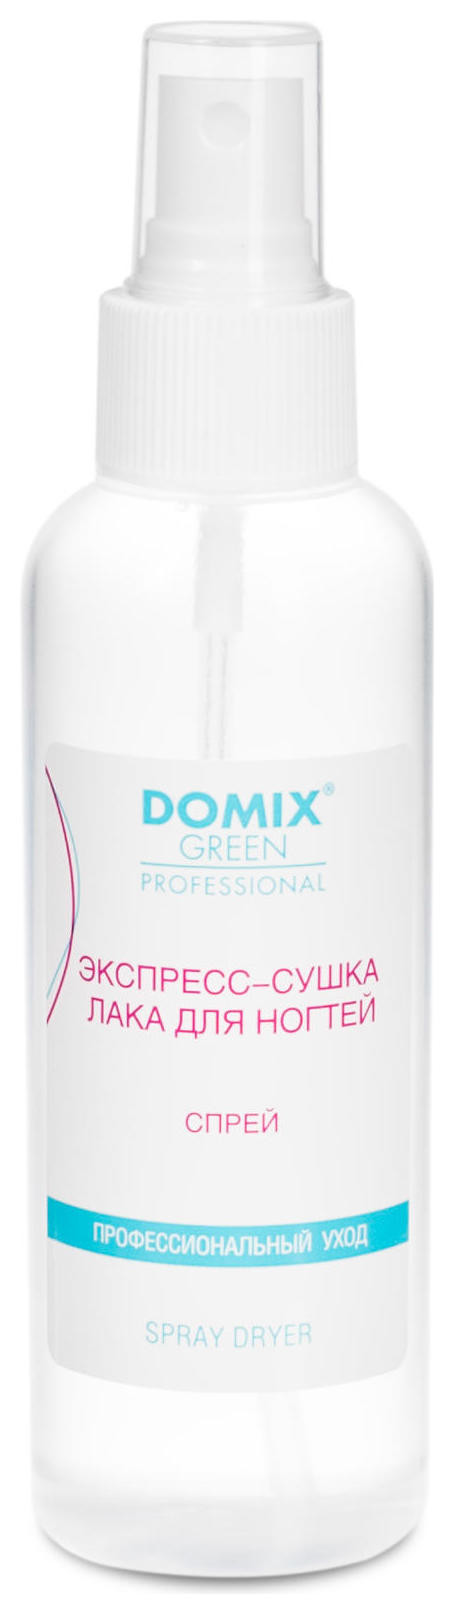 Экспресс-сушка спрей Domix Green Professional